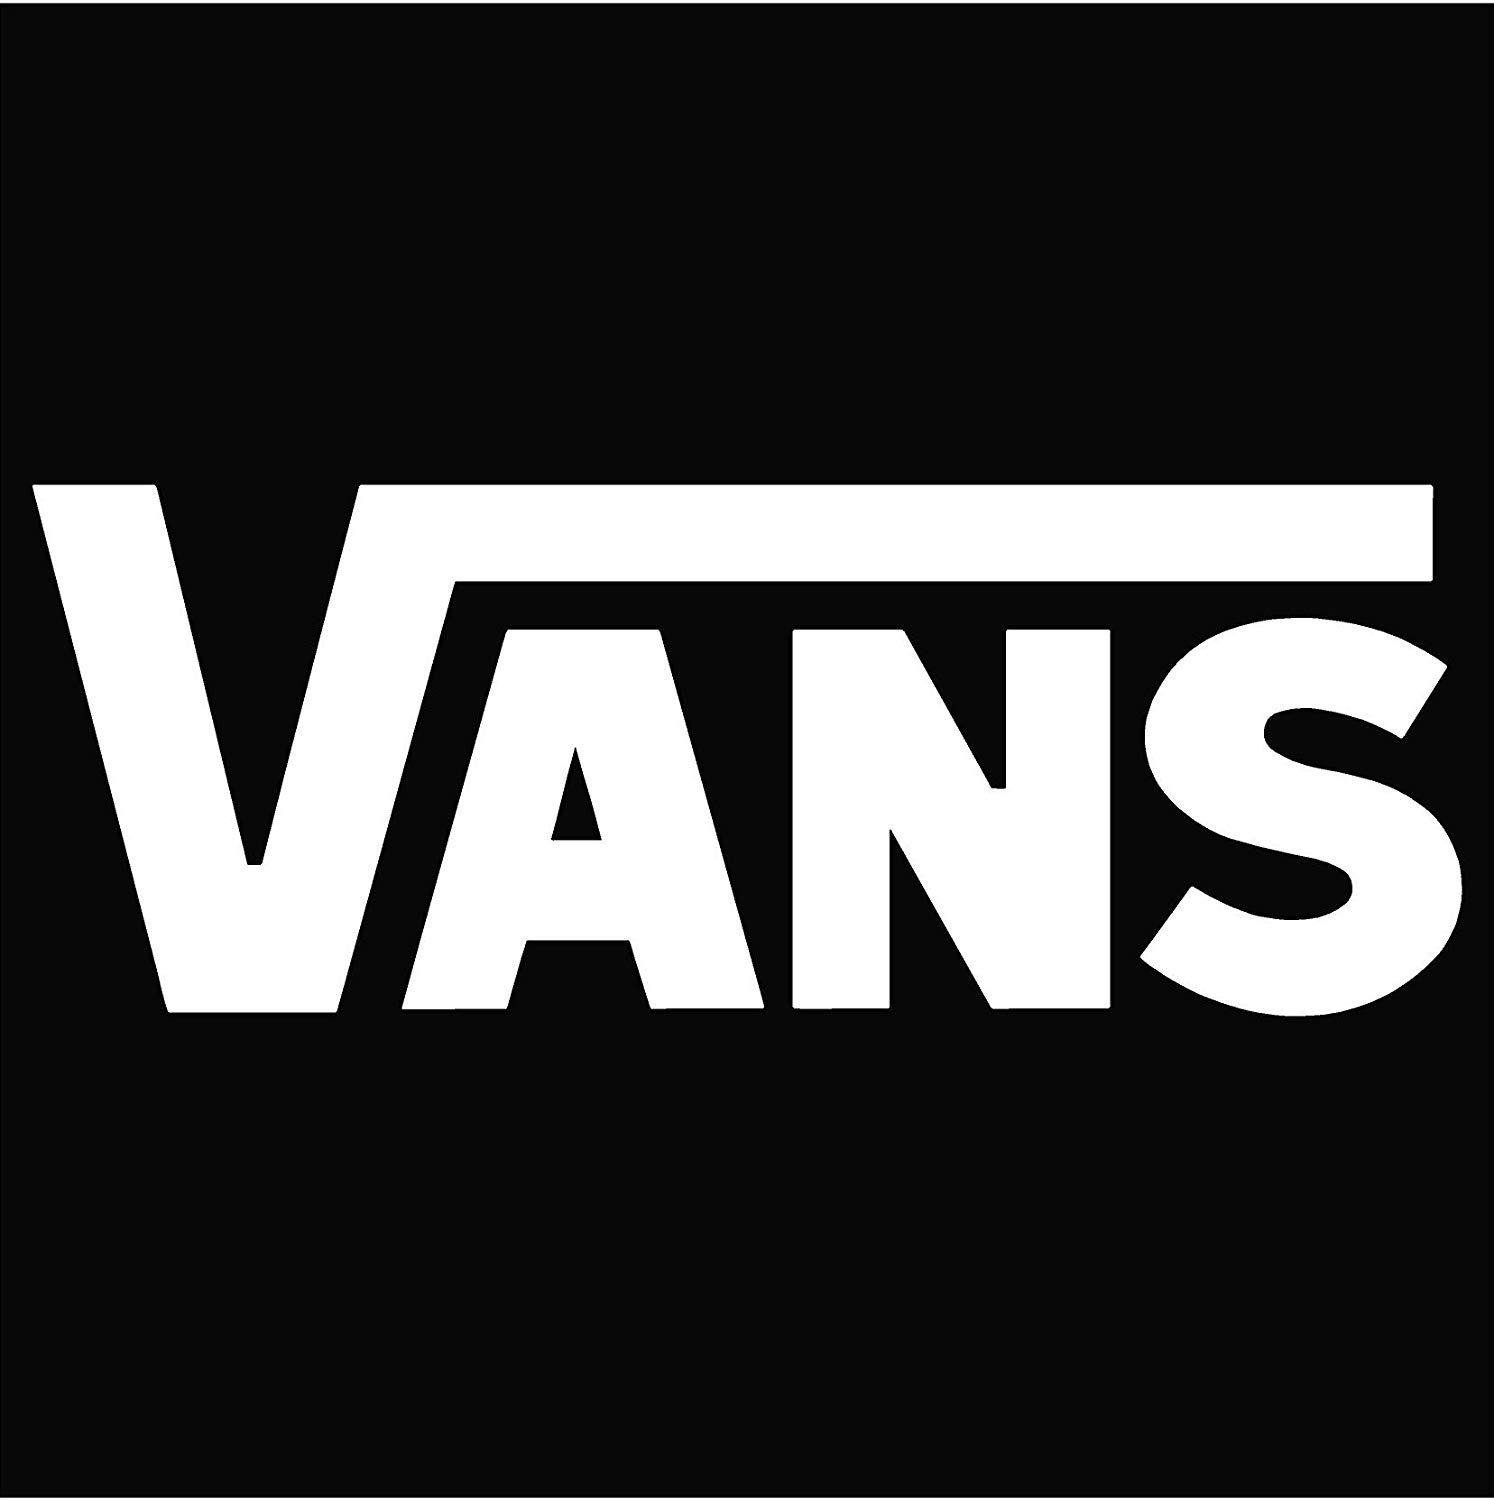 Black and White Vans Logo - Amazon.com: Vans Logo Vinyl Sticker Decal Decal-White-6 Inch: Automotive